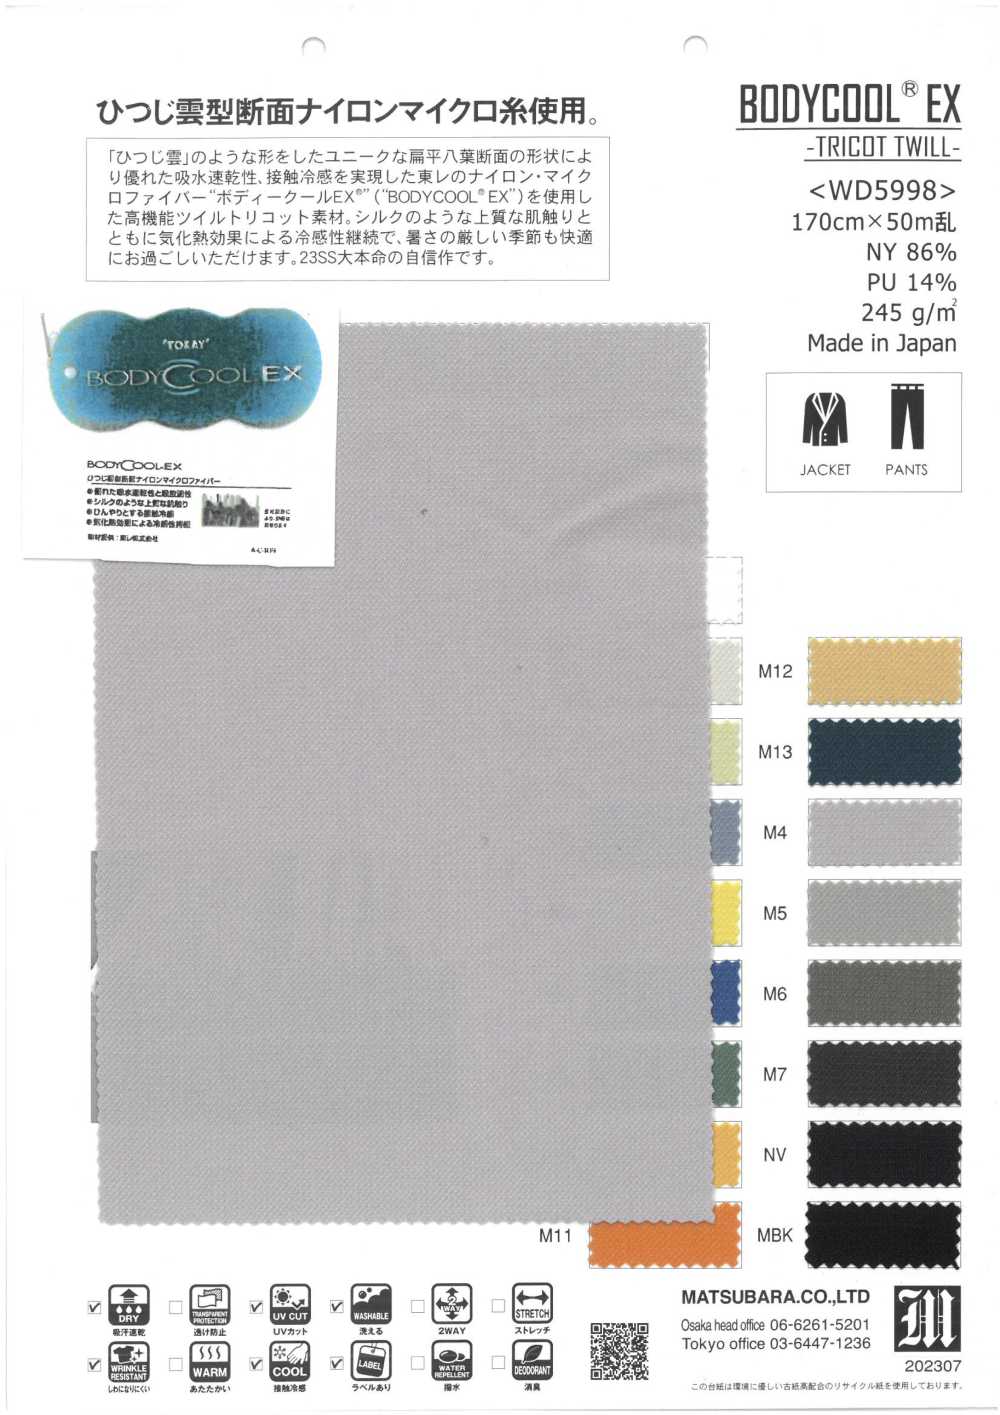 WD5998 BODYCOOL® EX -TRICOT TWILL-[Fabrication De Textile] Matsubara